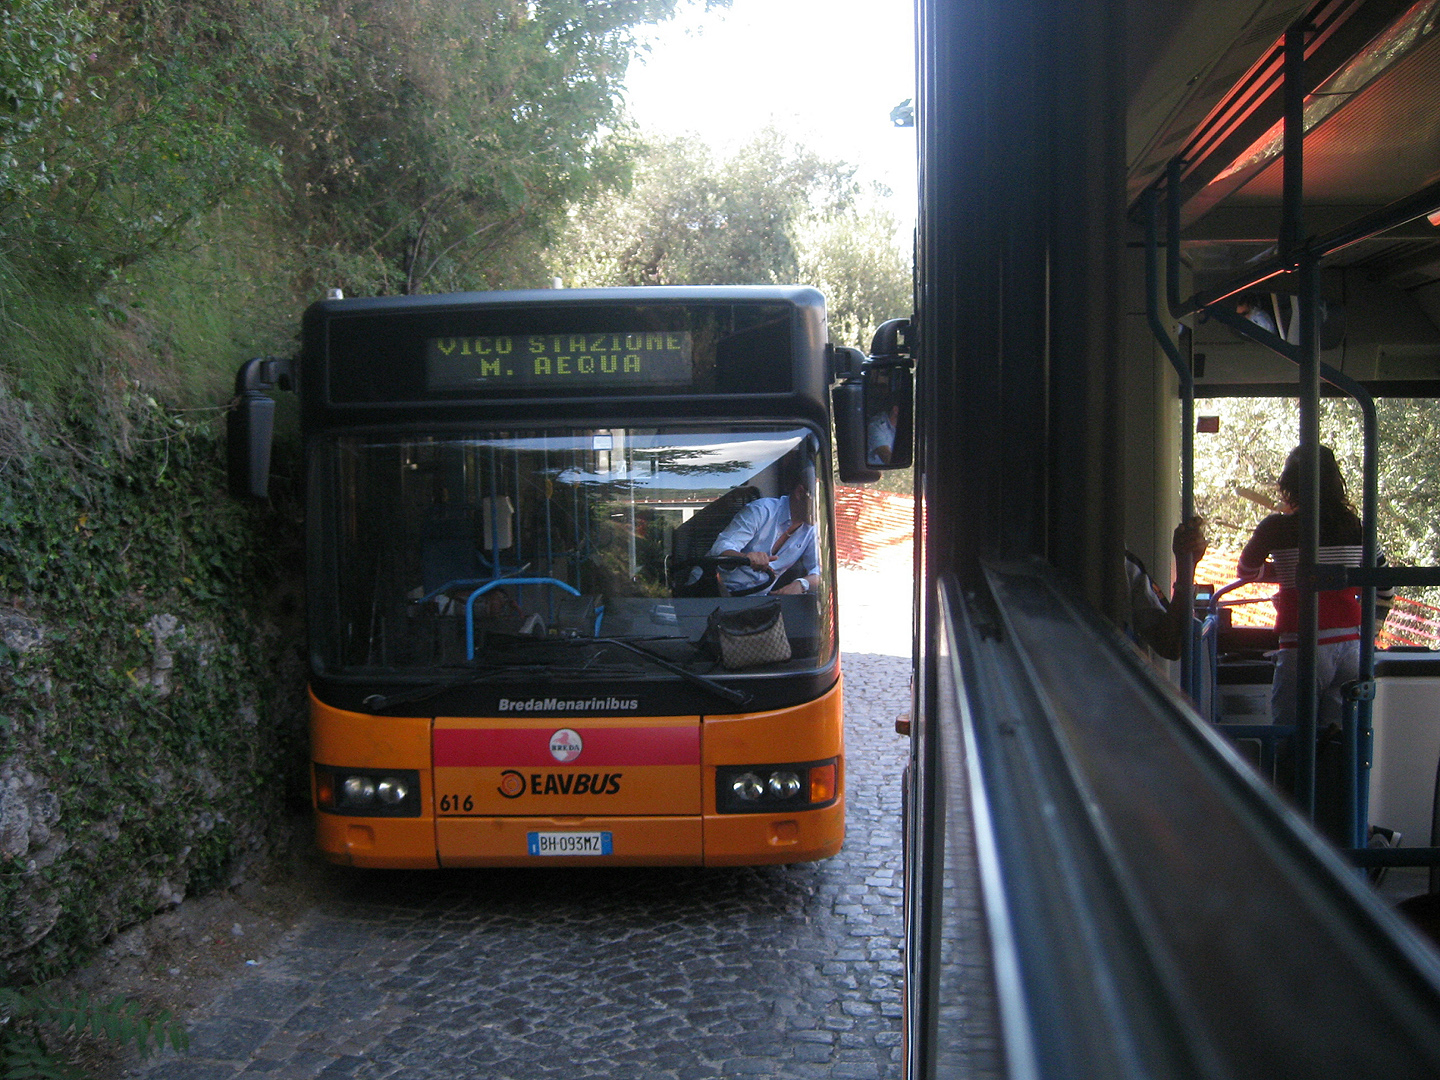 Twee bussen passeren elkaar op smalle weg., Two busses passing on a narrow road.